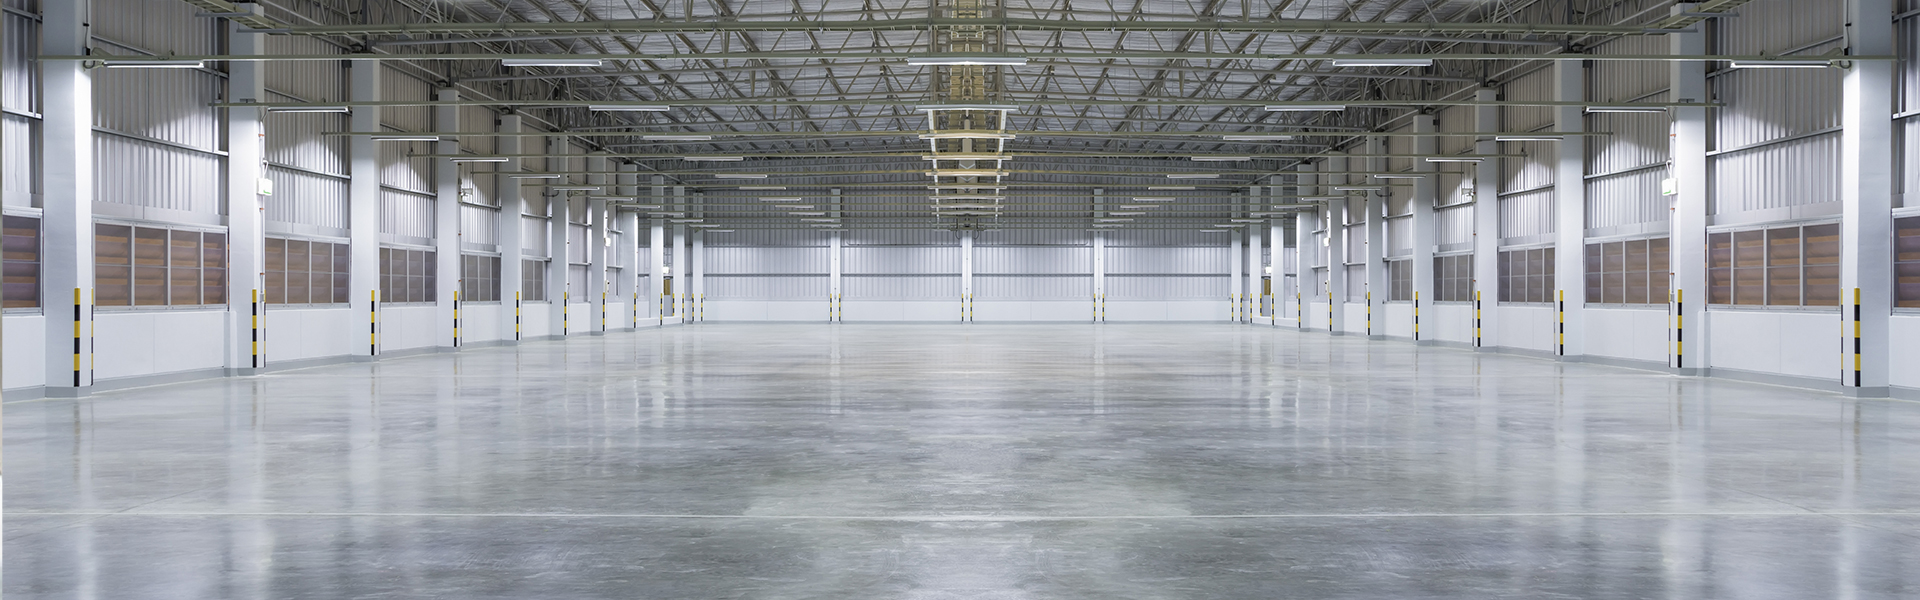 industrial concrete flooring in warehouse